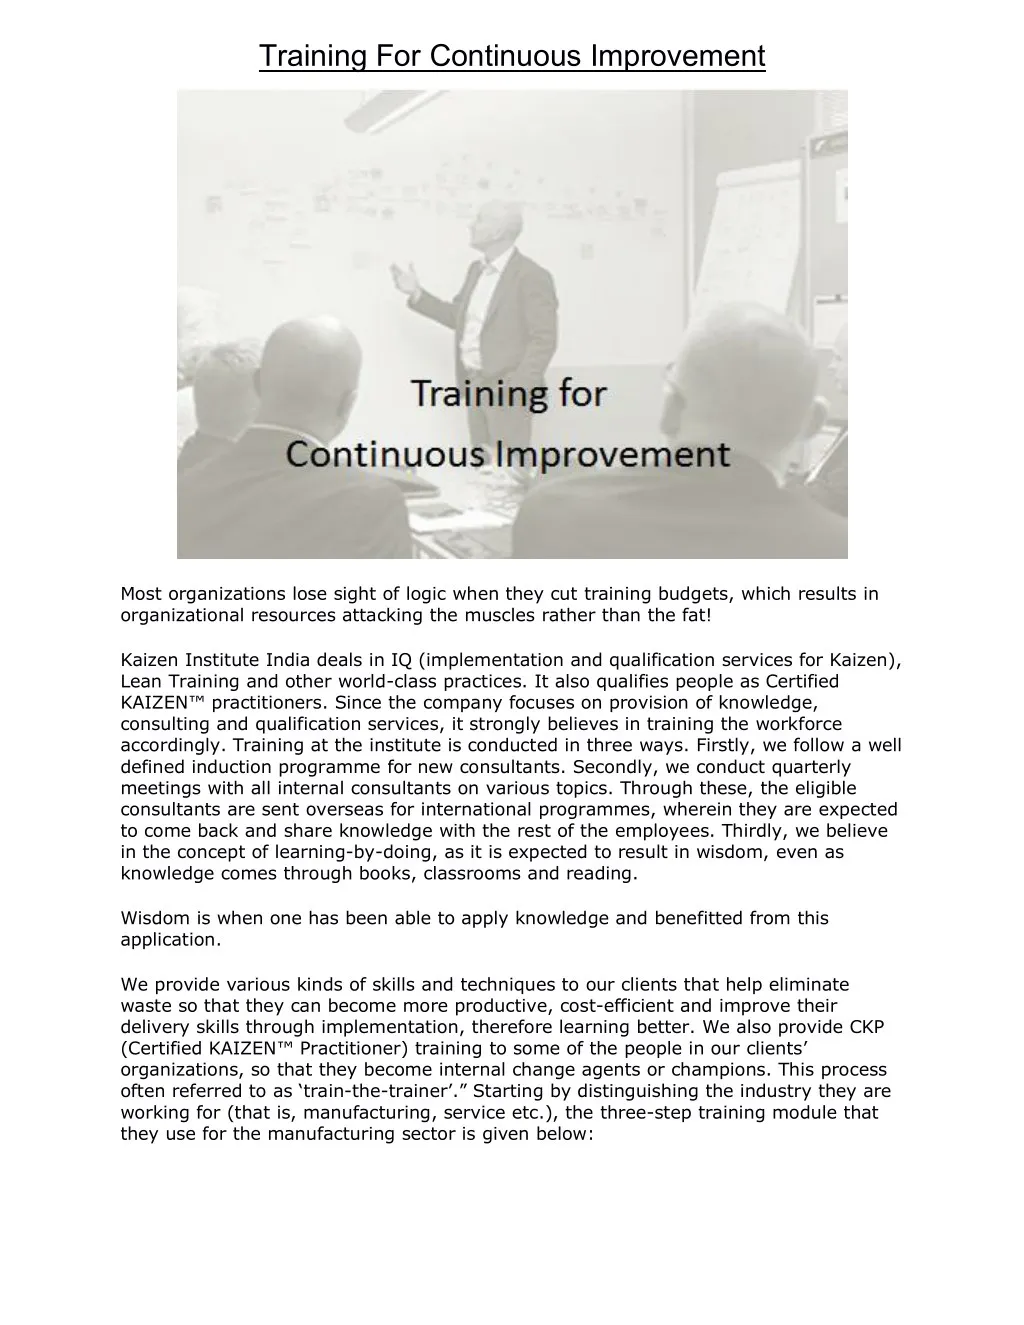 training for continuous improvement